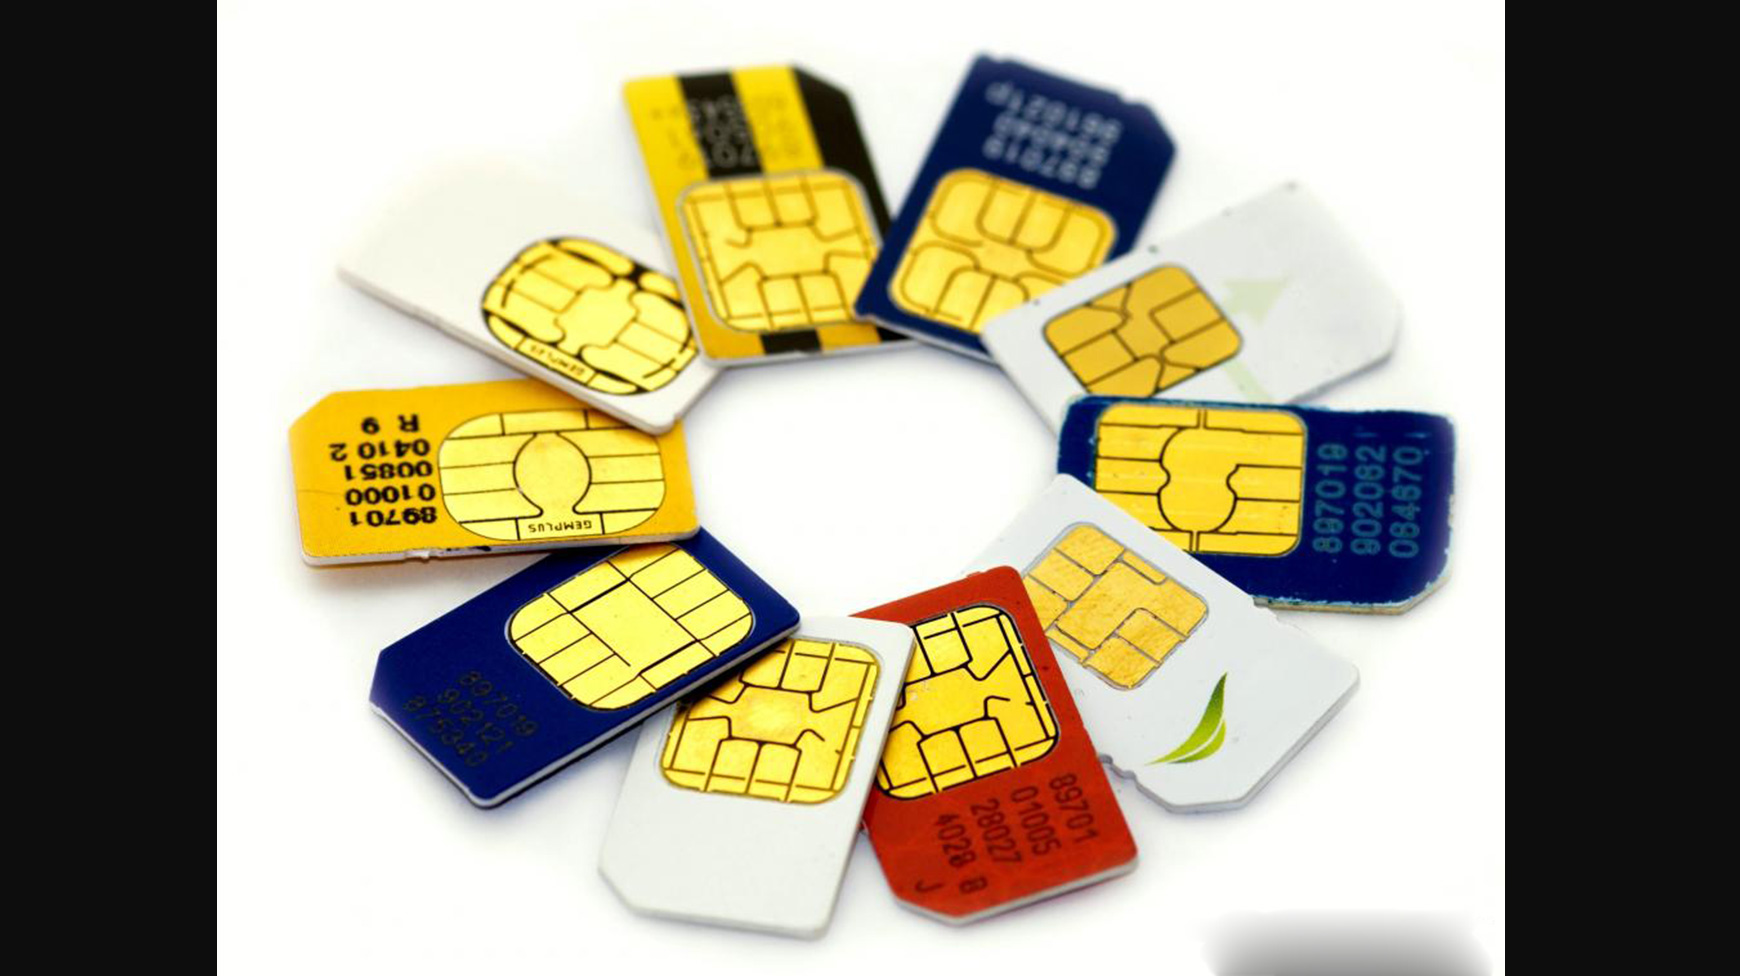 All-SIM-cards